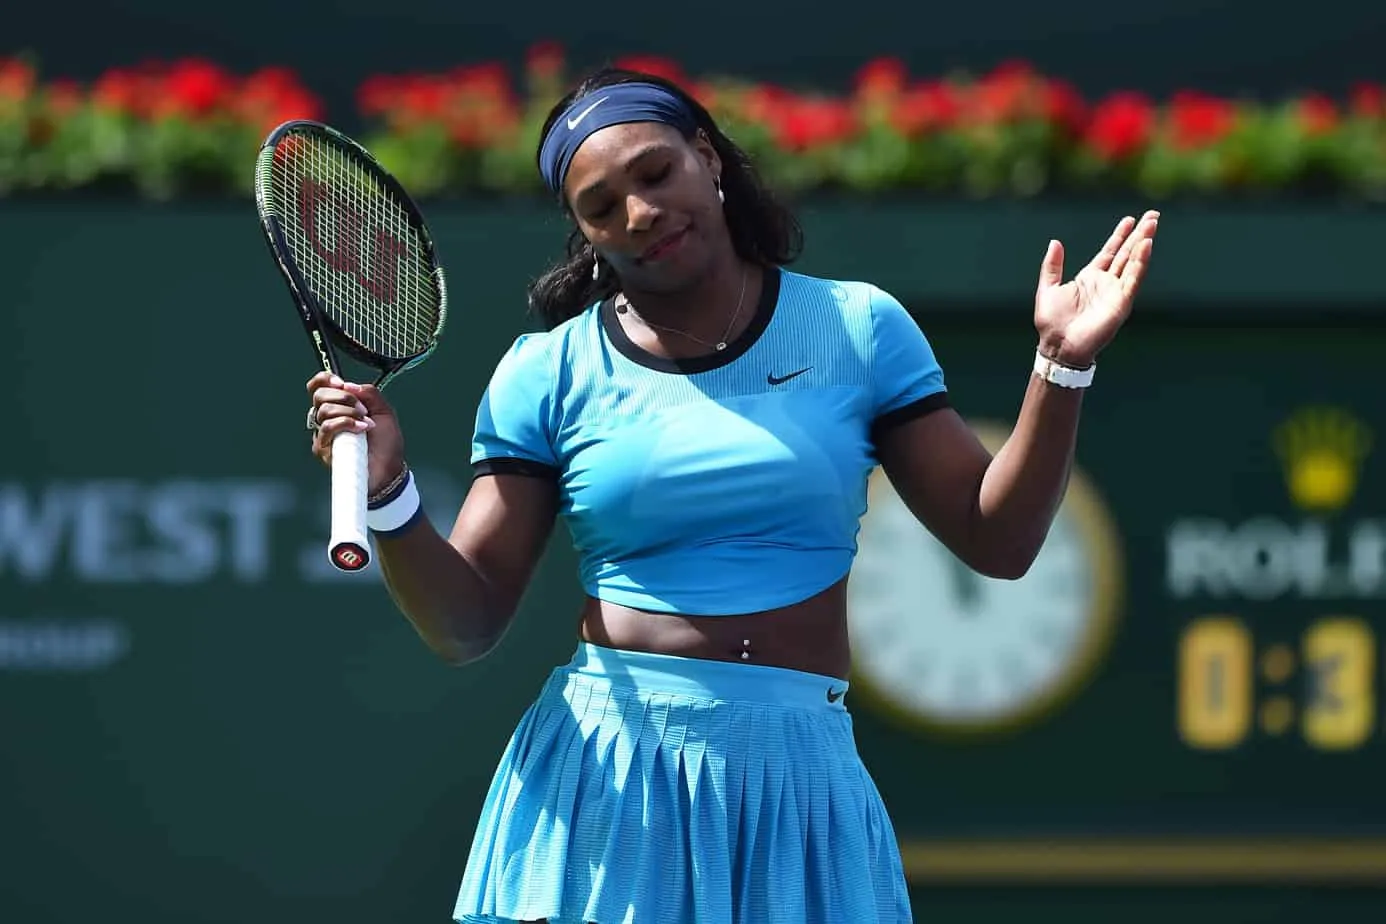 Williams_Serena_IndianWells2016